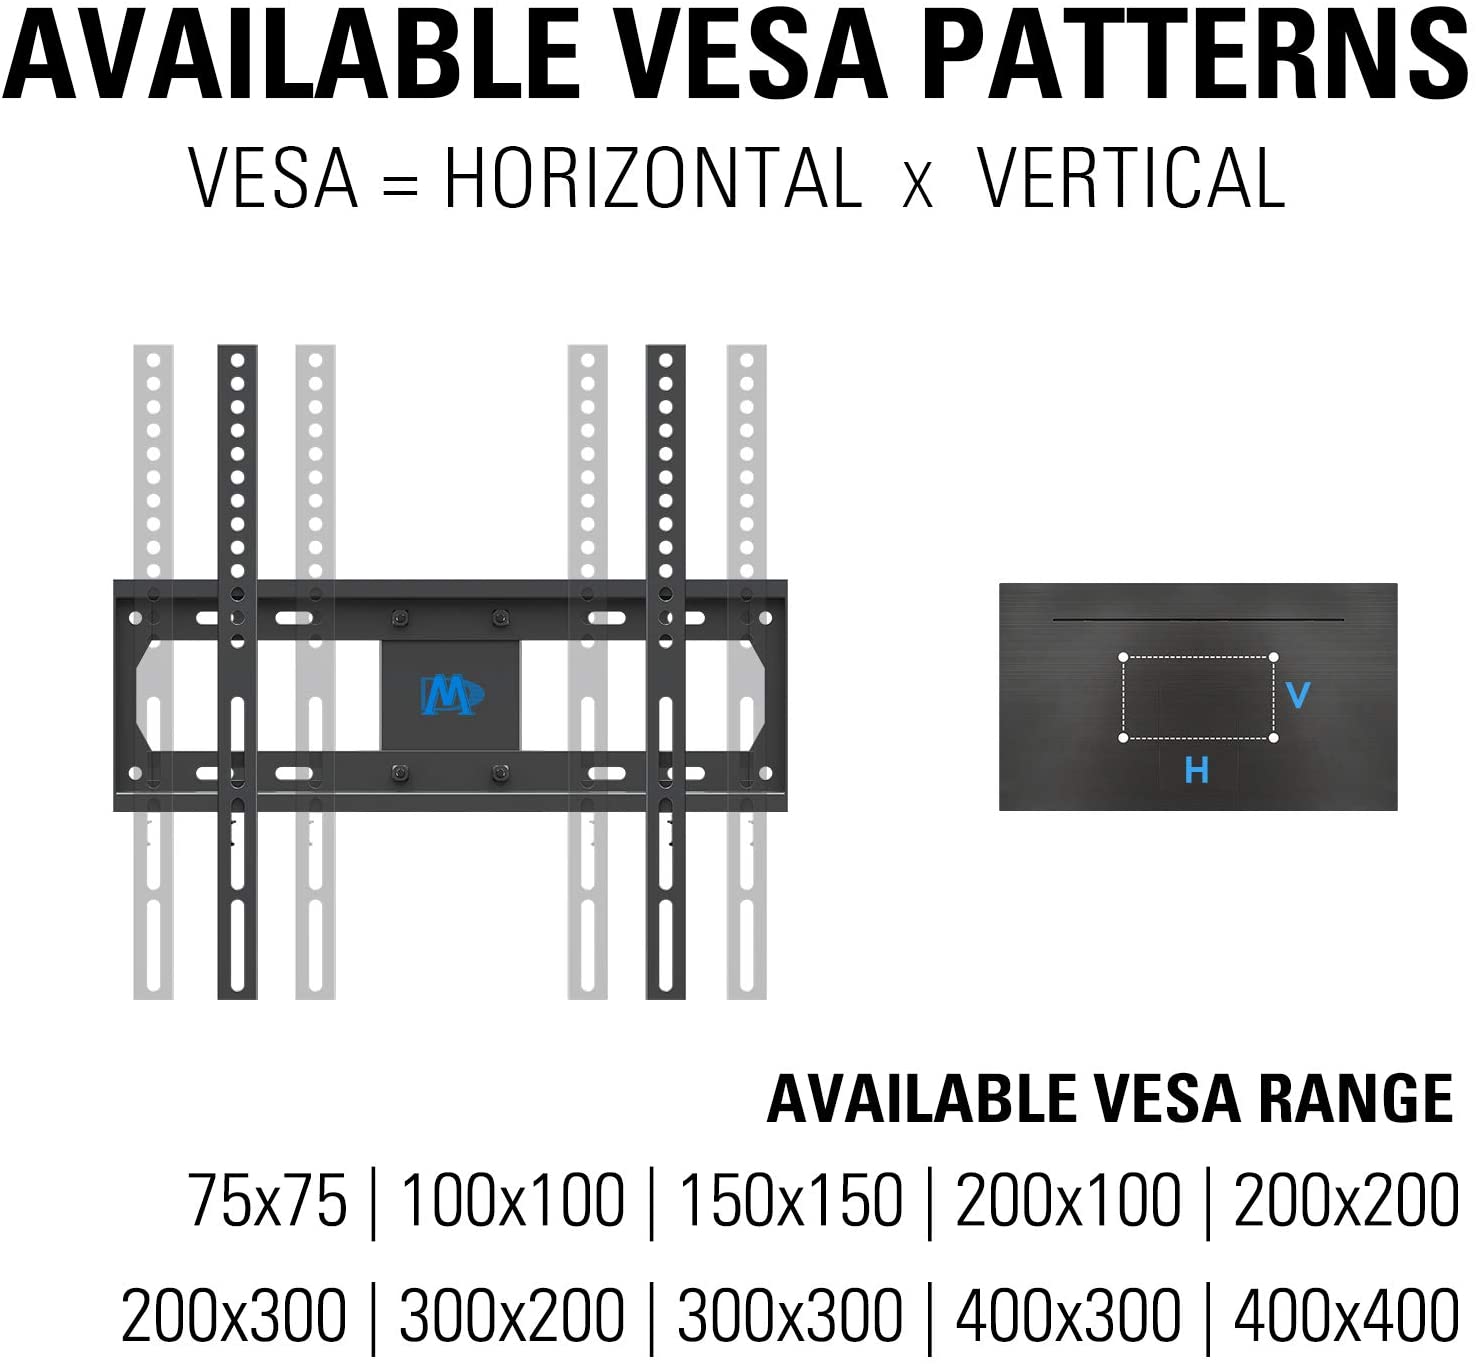 vesa mount fits VESA from 75×75 to 400×400